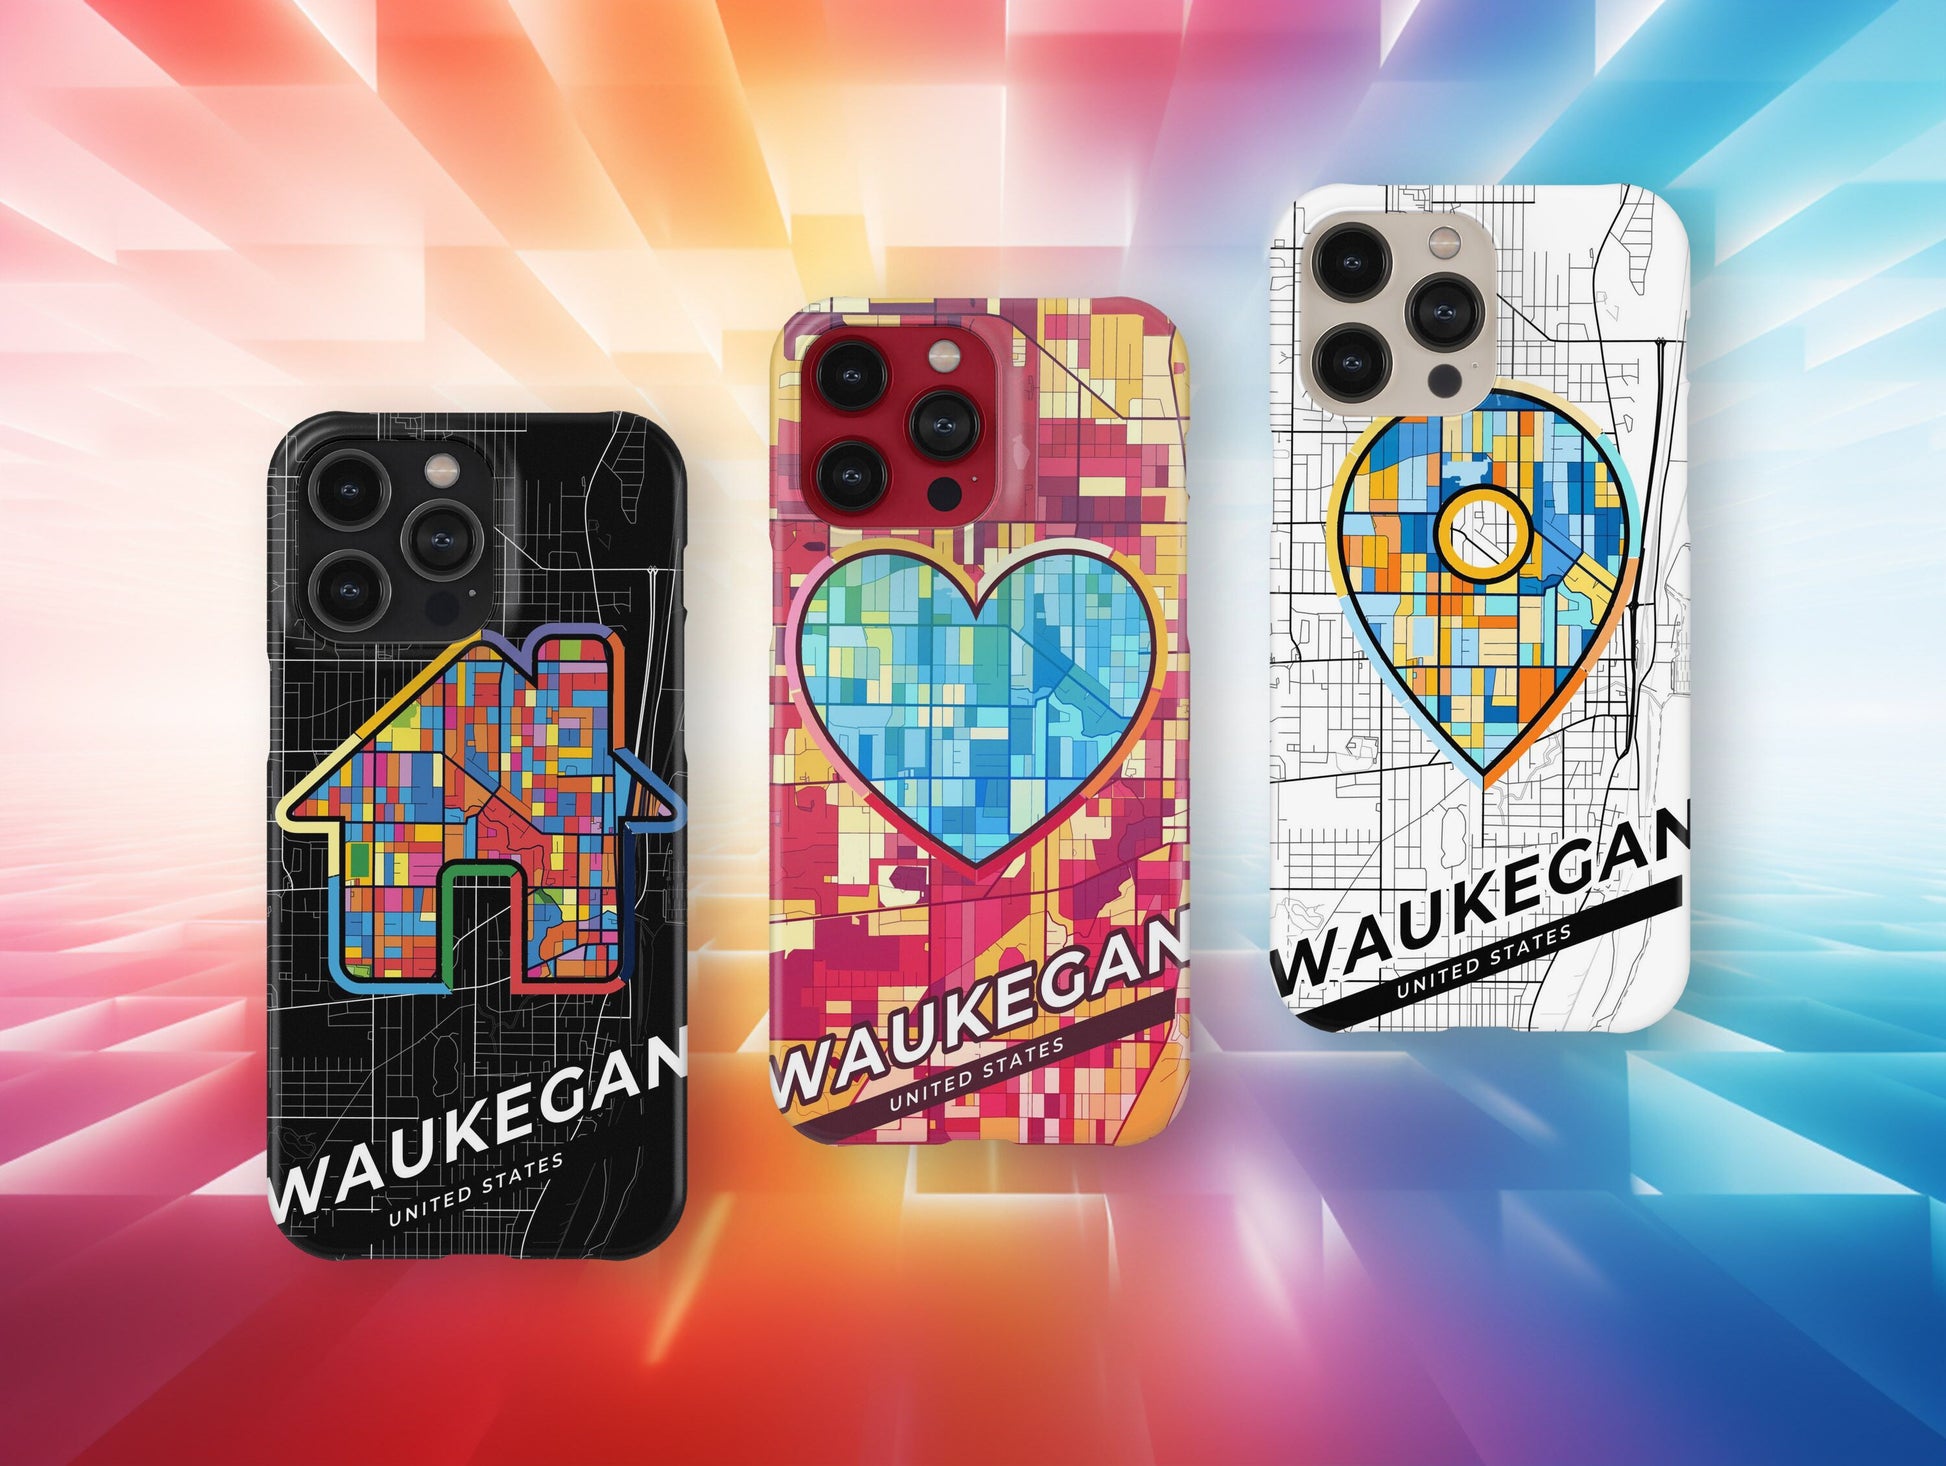 Waukegan Illinois slim phone case with colorful icon